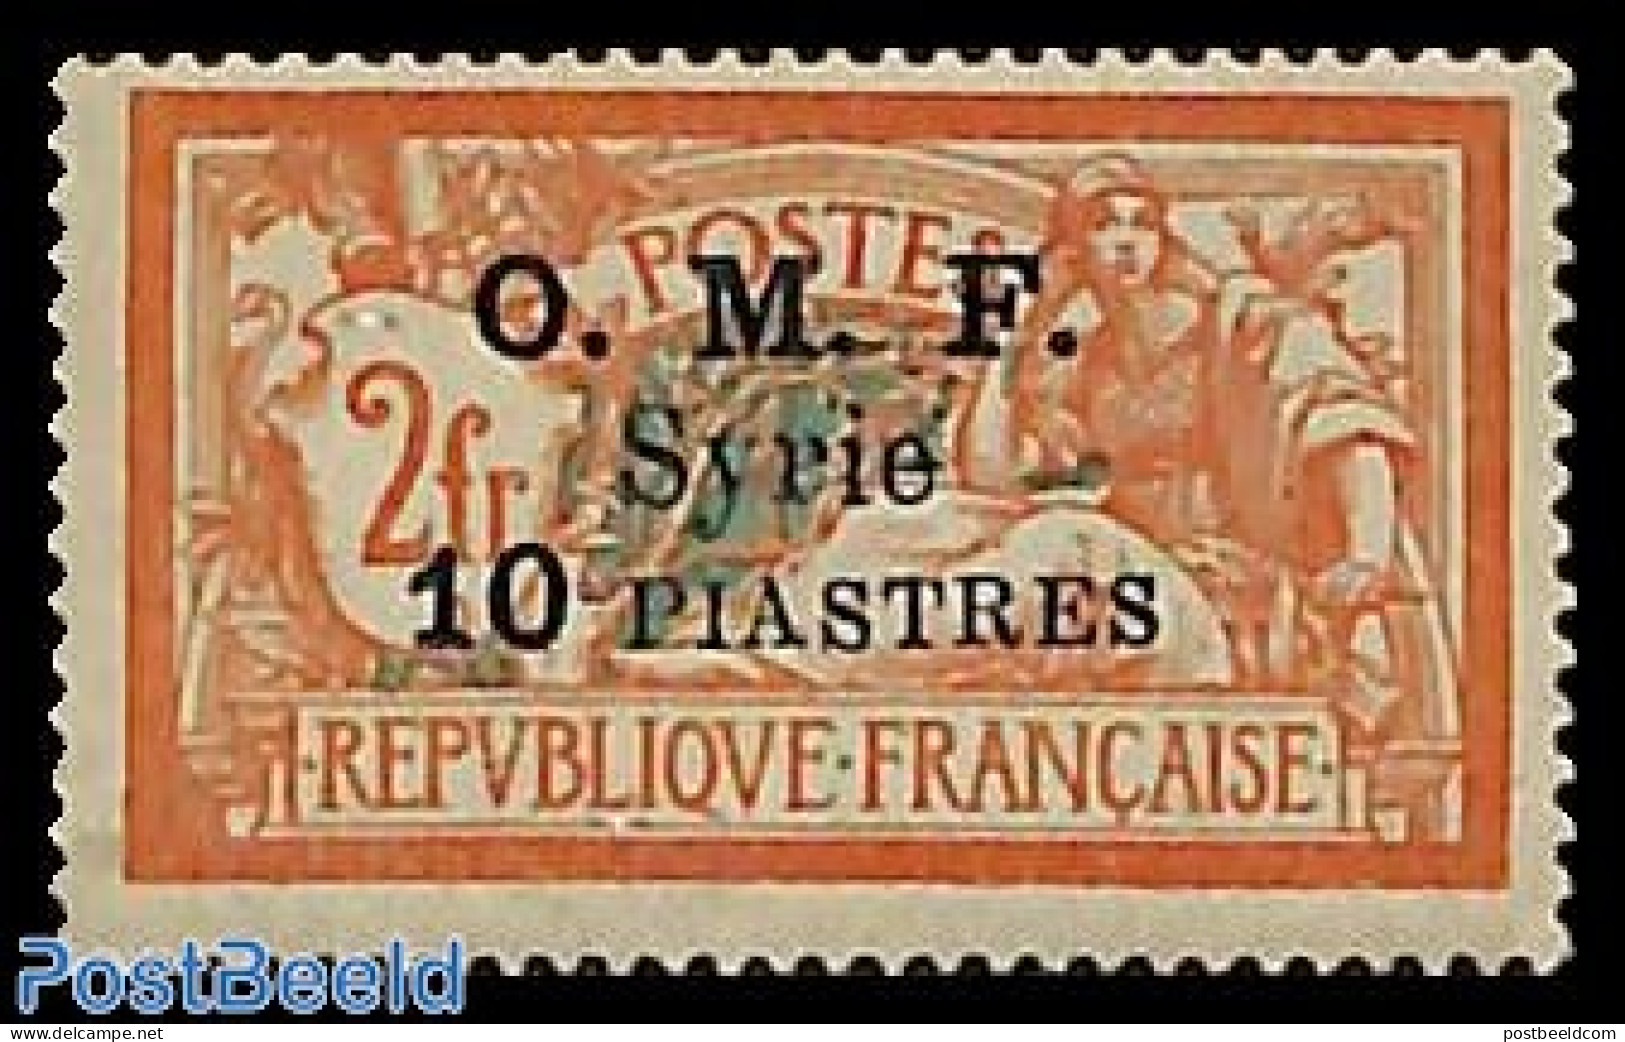 Syria 1921 10P On 2Fr, Stamp Out Of Set, Unused (hinged) - Siria